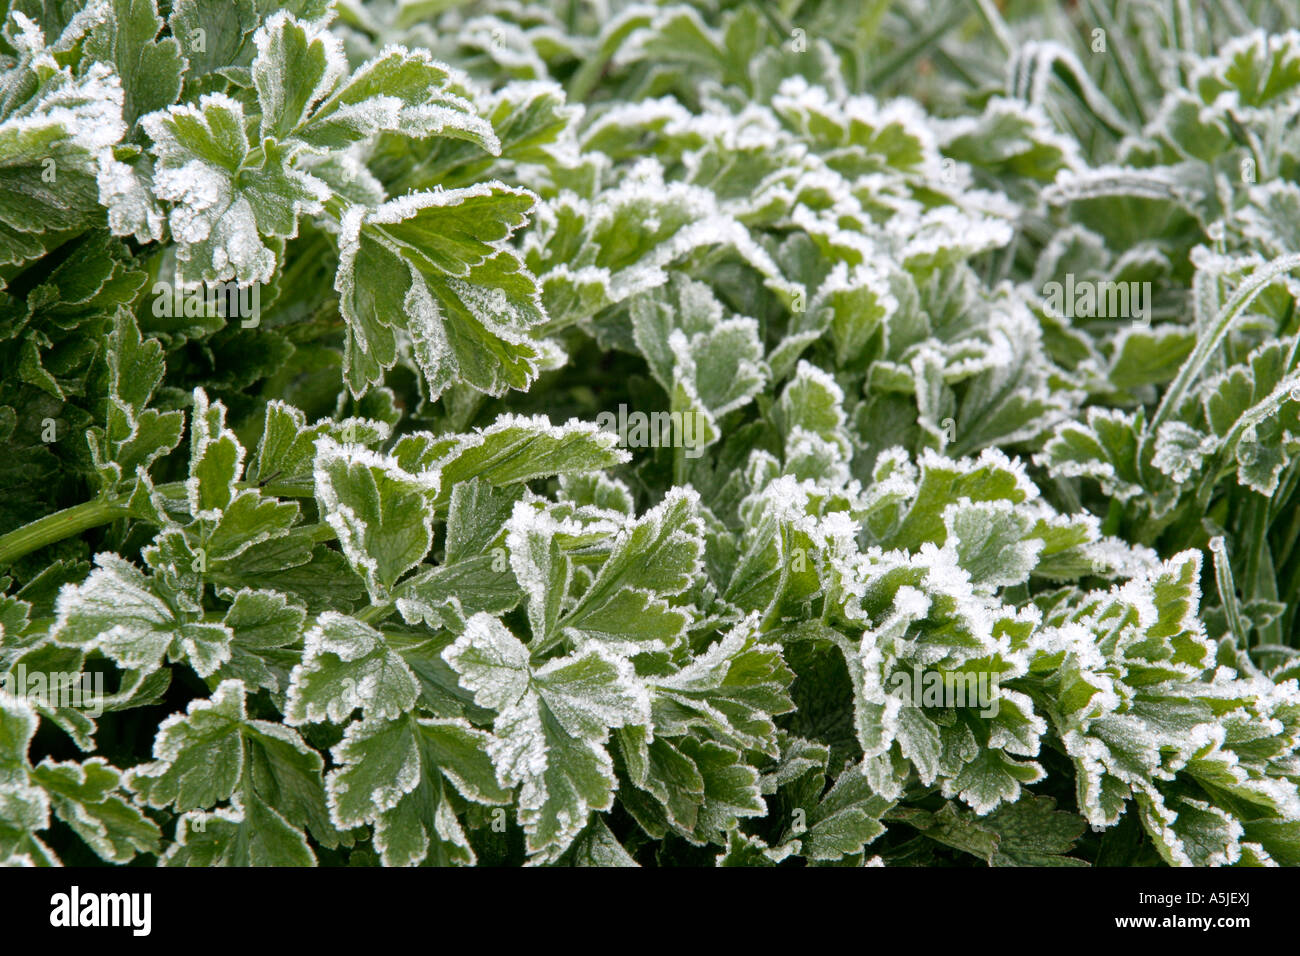 Frost on the newly emerging foliage of Hemlock water Dropwort Oenanthe crocata Stock Photo